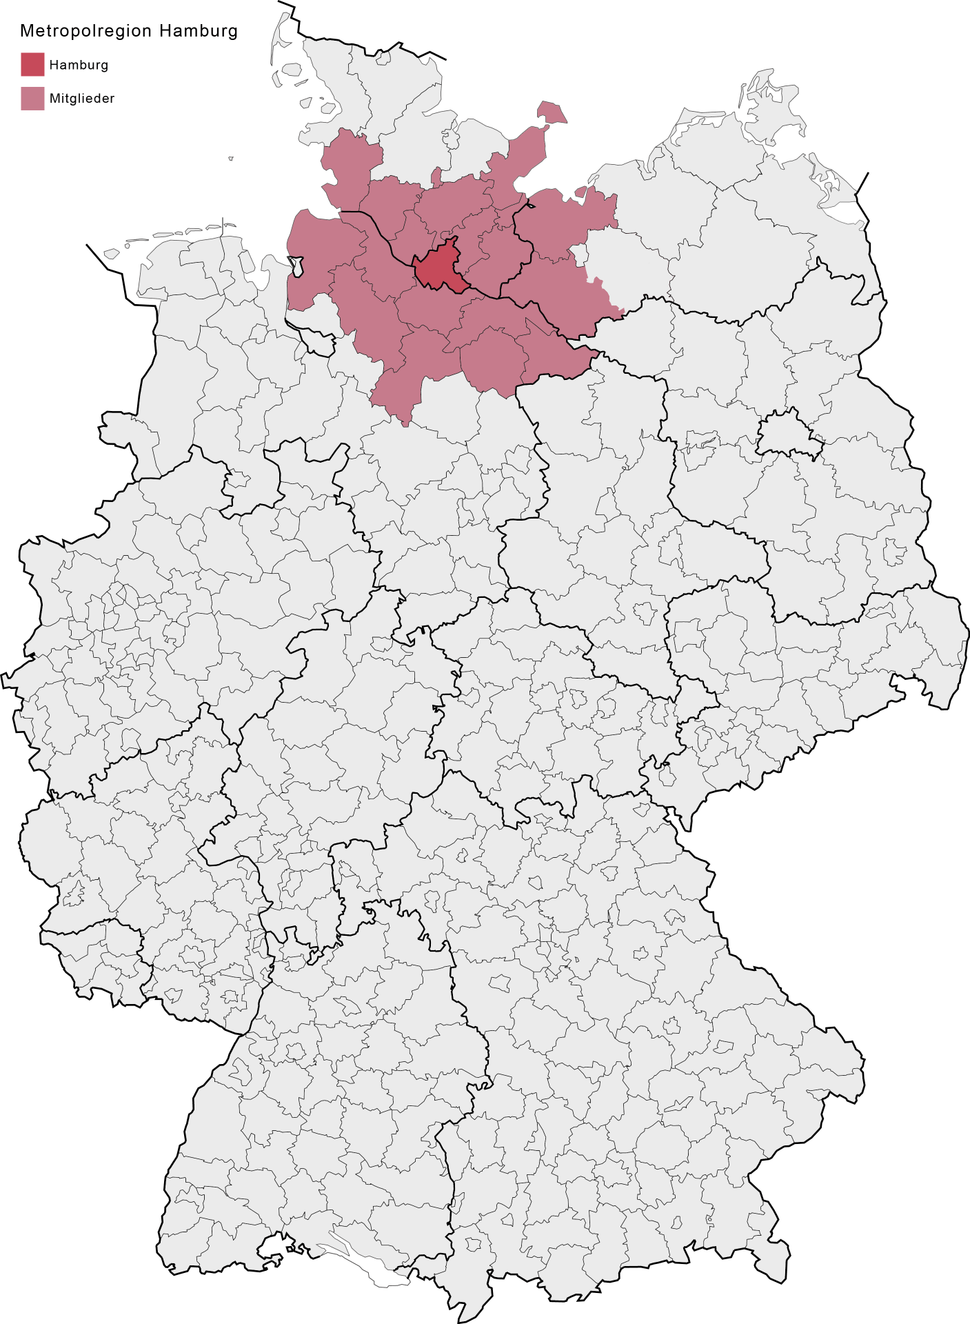 Metropolregion Hamburg 2012